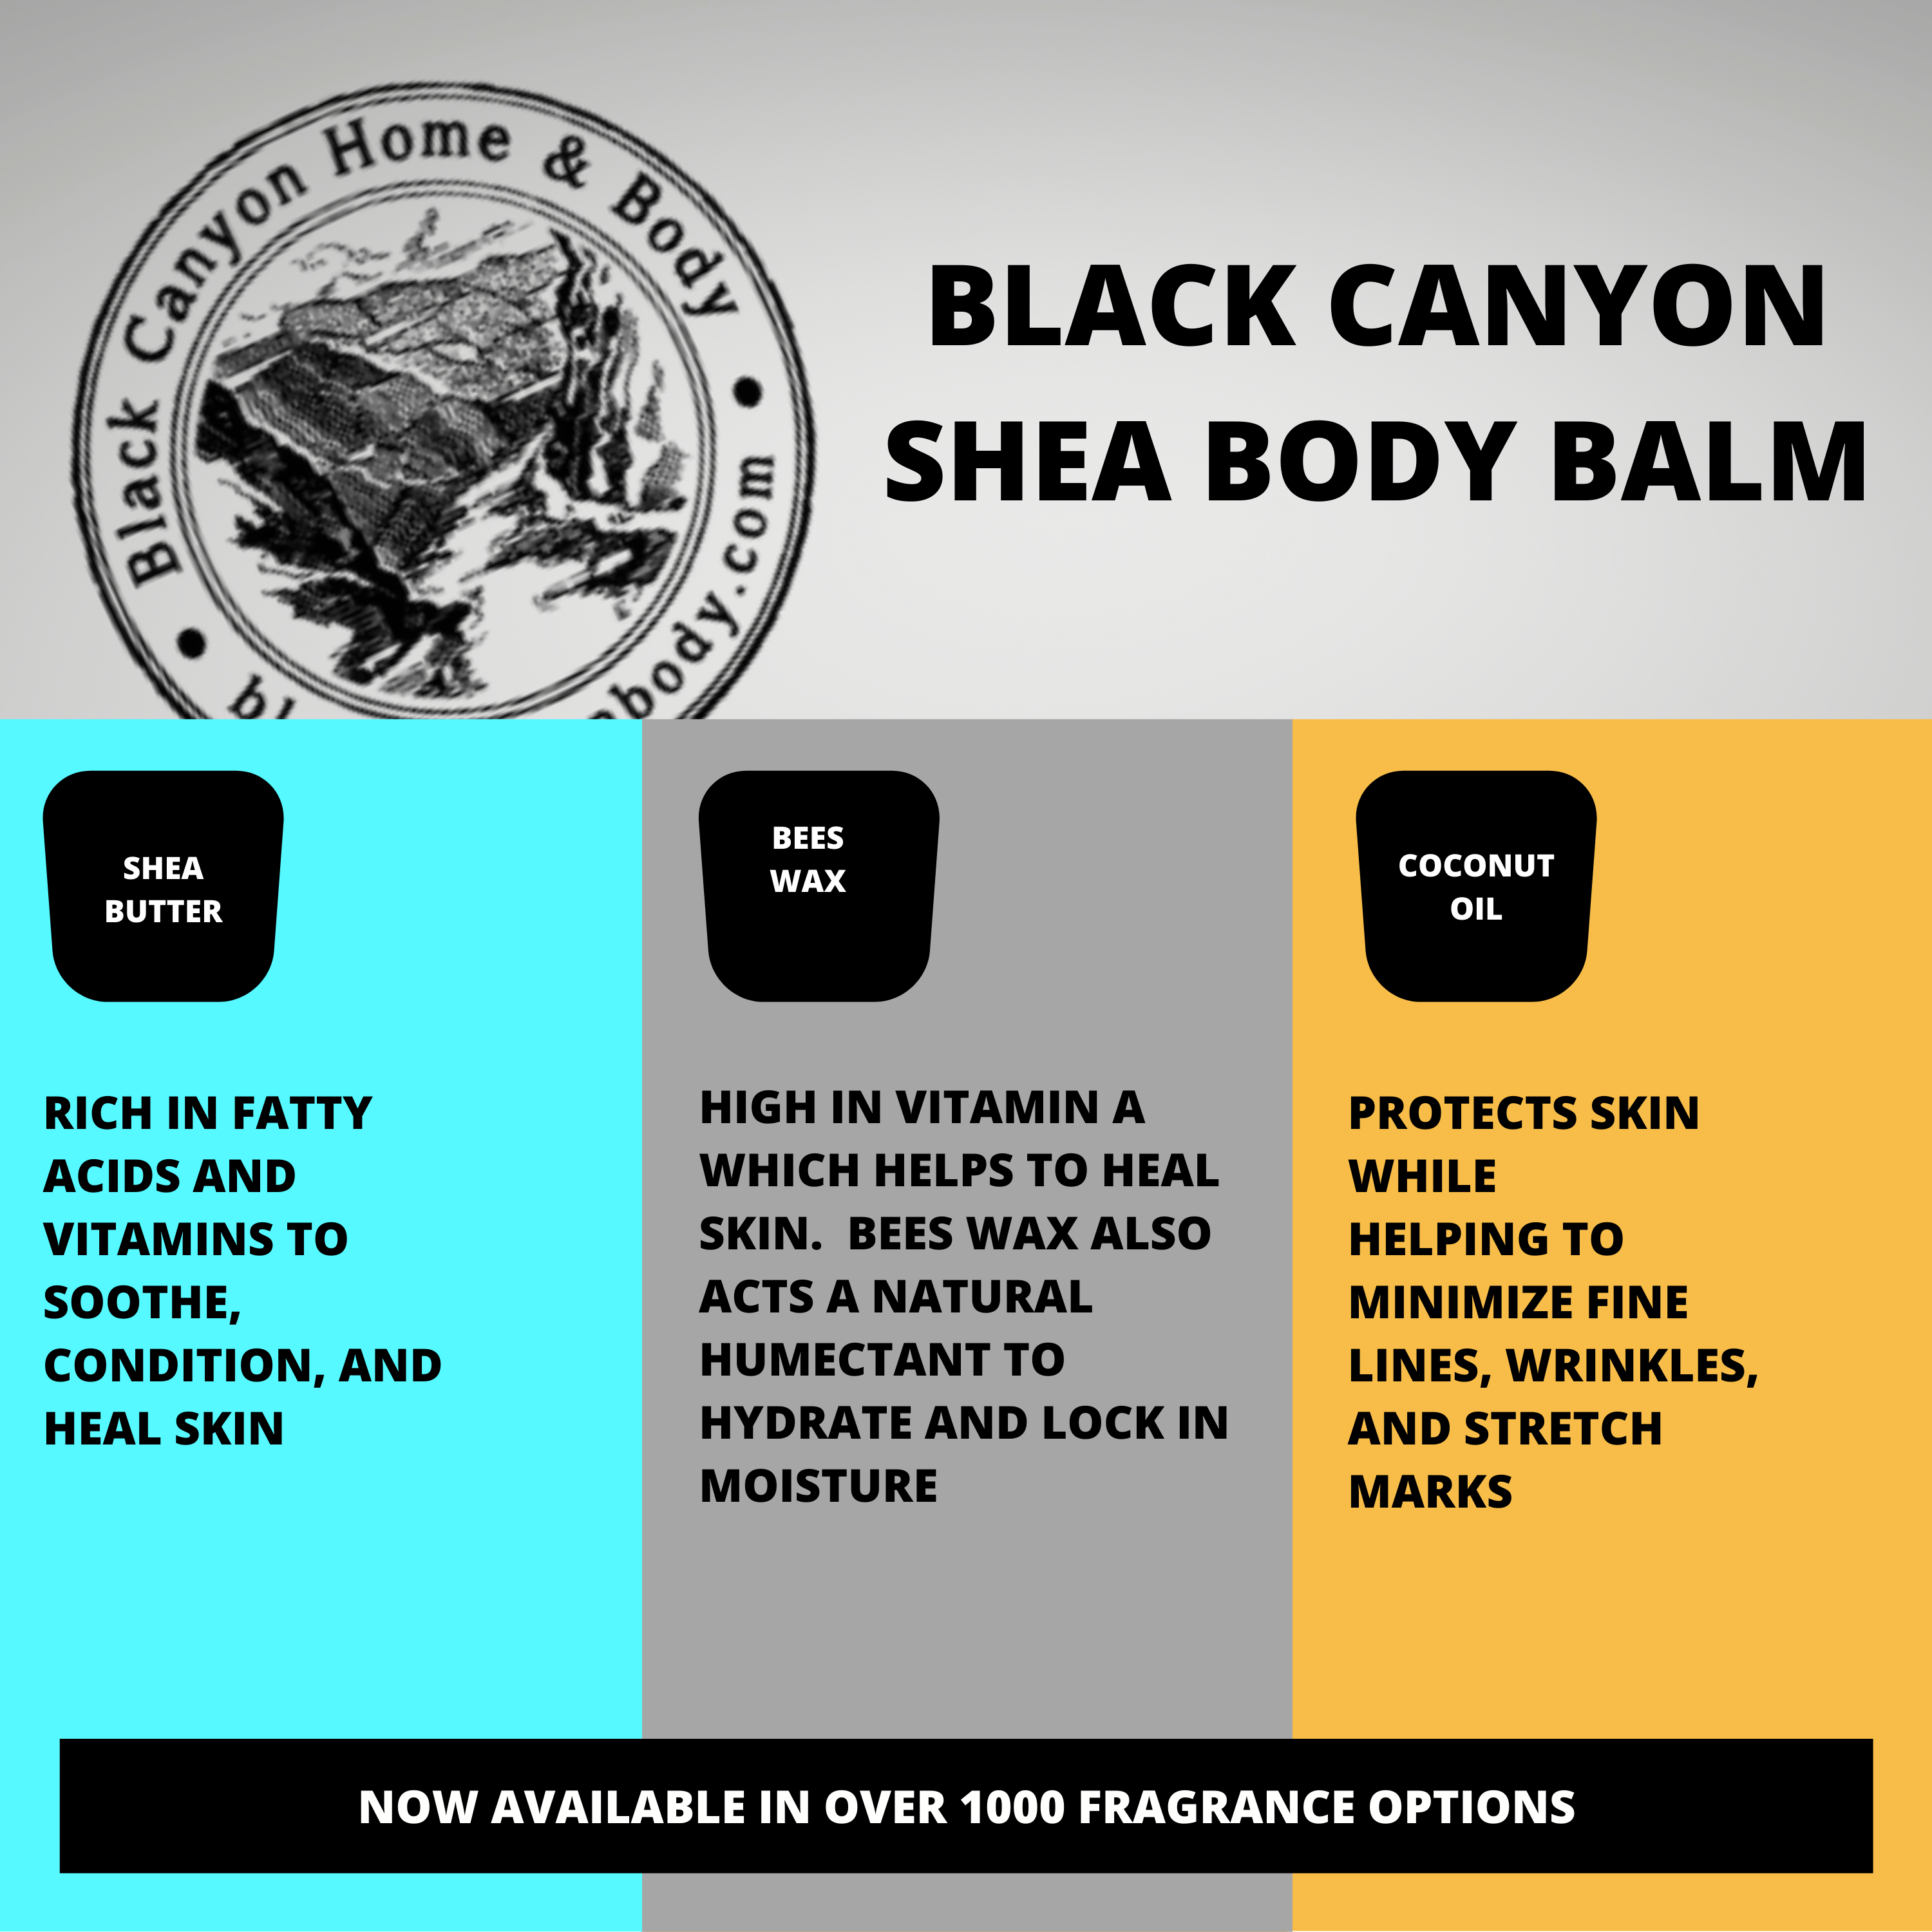 Black Canyon Banana Kiwi Scented Natural Body Balm with Shea